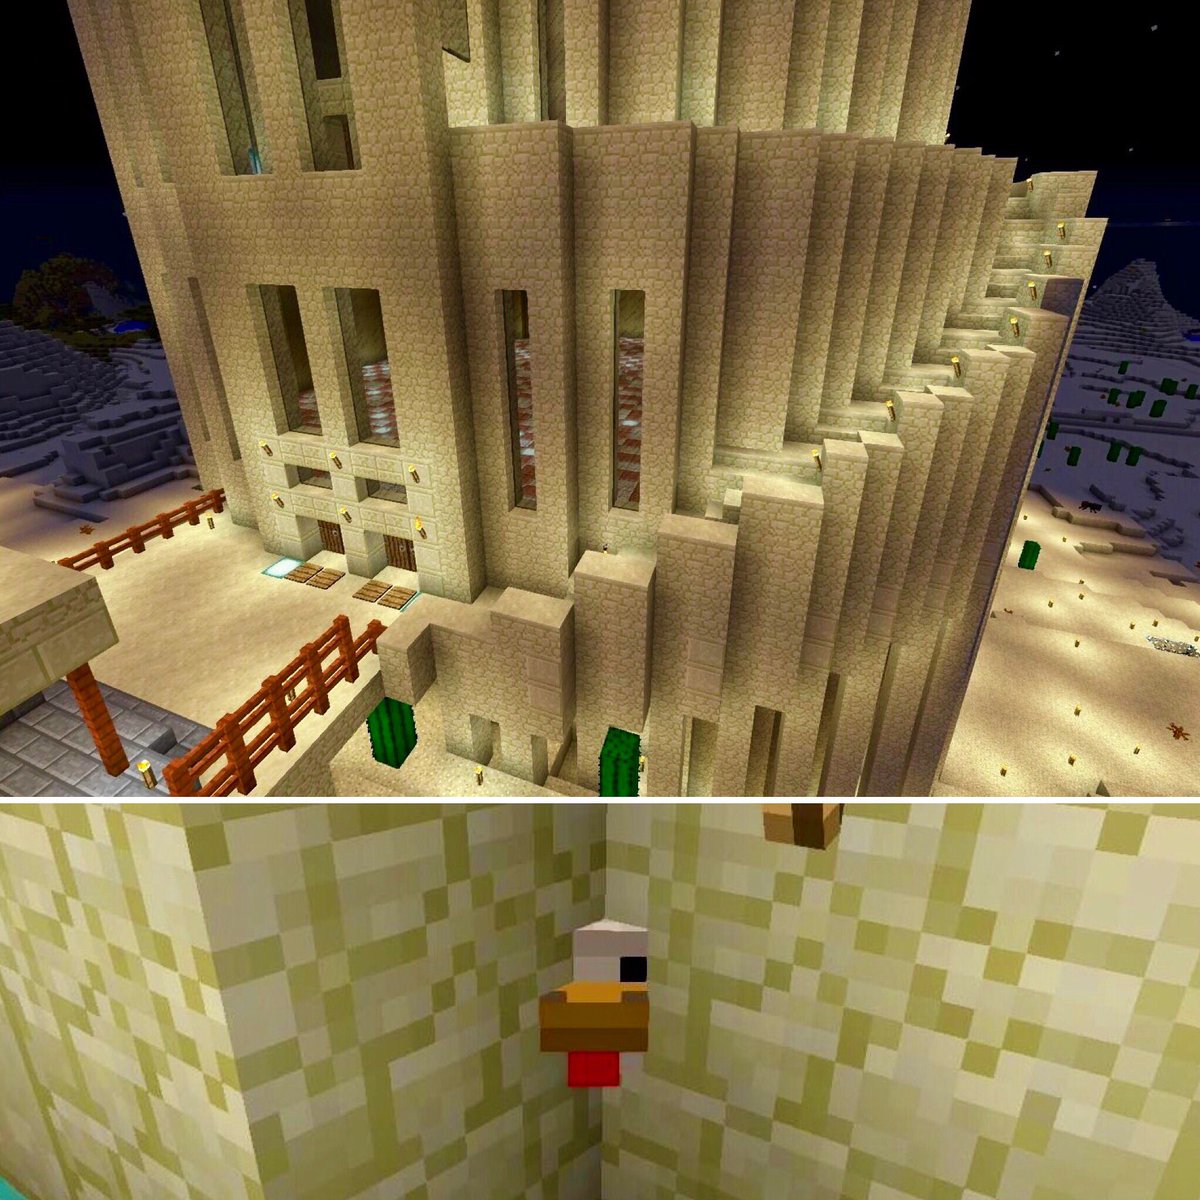 Jeani Saiki A Twitter バベルの塔 螺旋階段もできました 近所の鳥さんも気になって見ております The Tower Of Babel A Spiral Staircase Was Made Minecraft マインクラフト マイクラ T Co Mlmedprnz1 Twitter